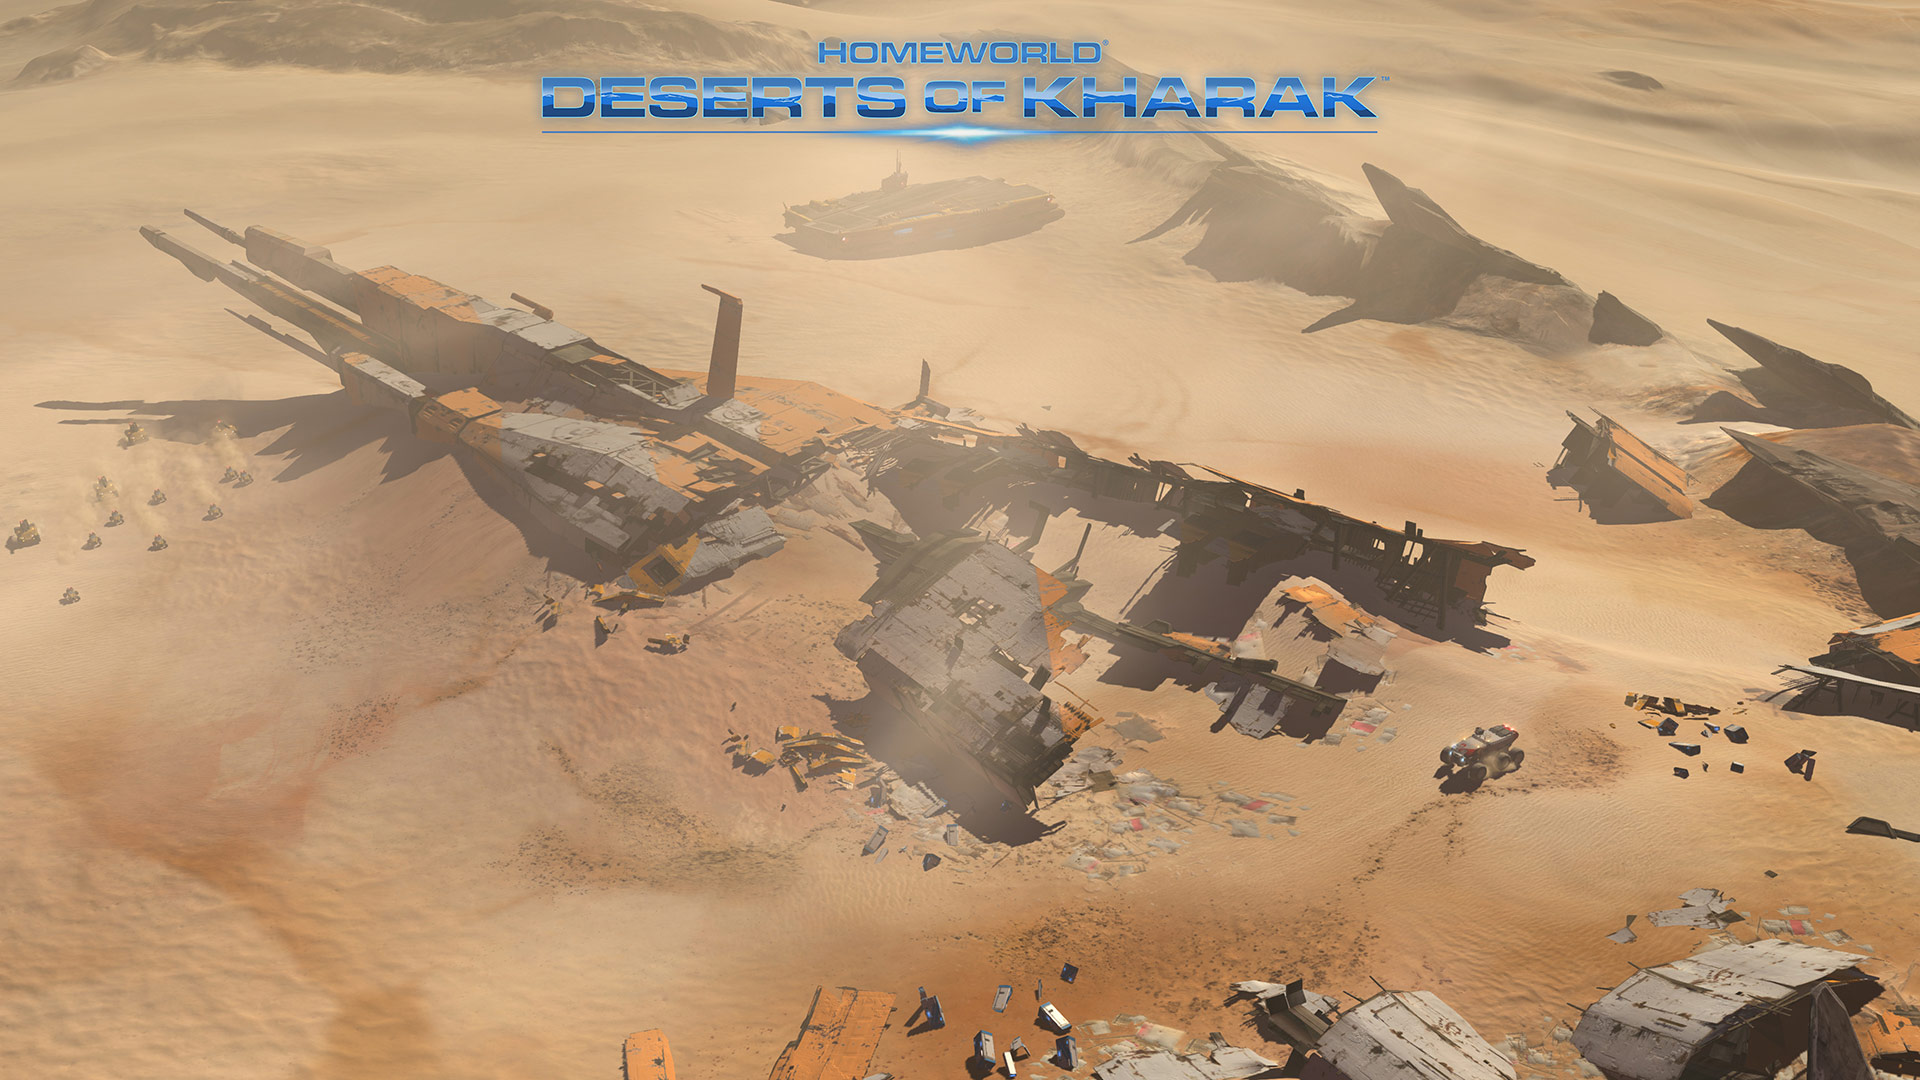 Video Game Homeworld: Deserts of Kharak HD Wallpaper | Background Image